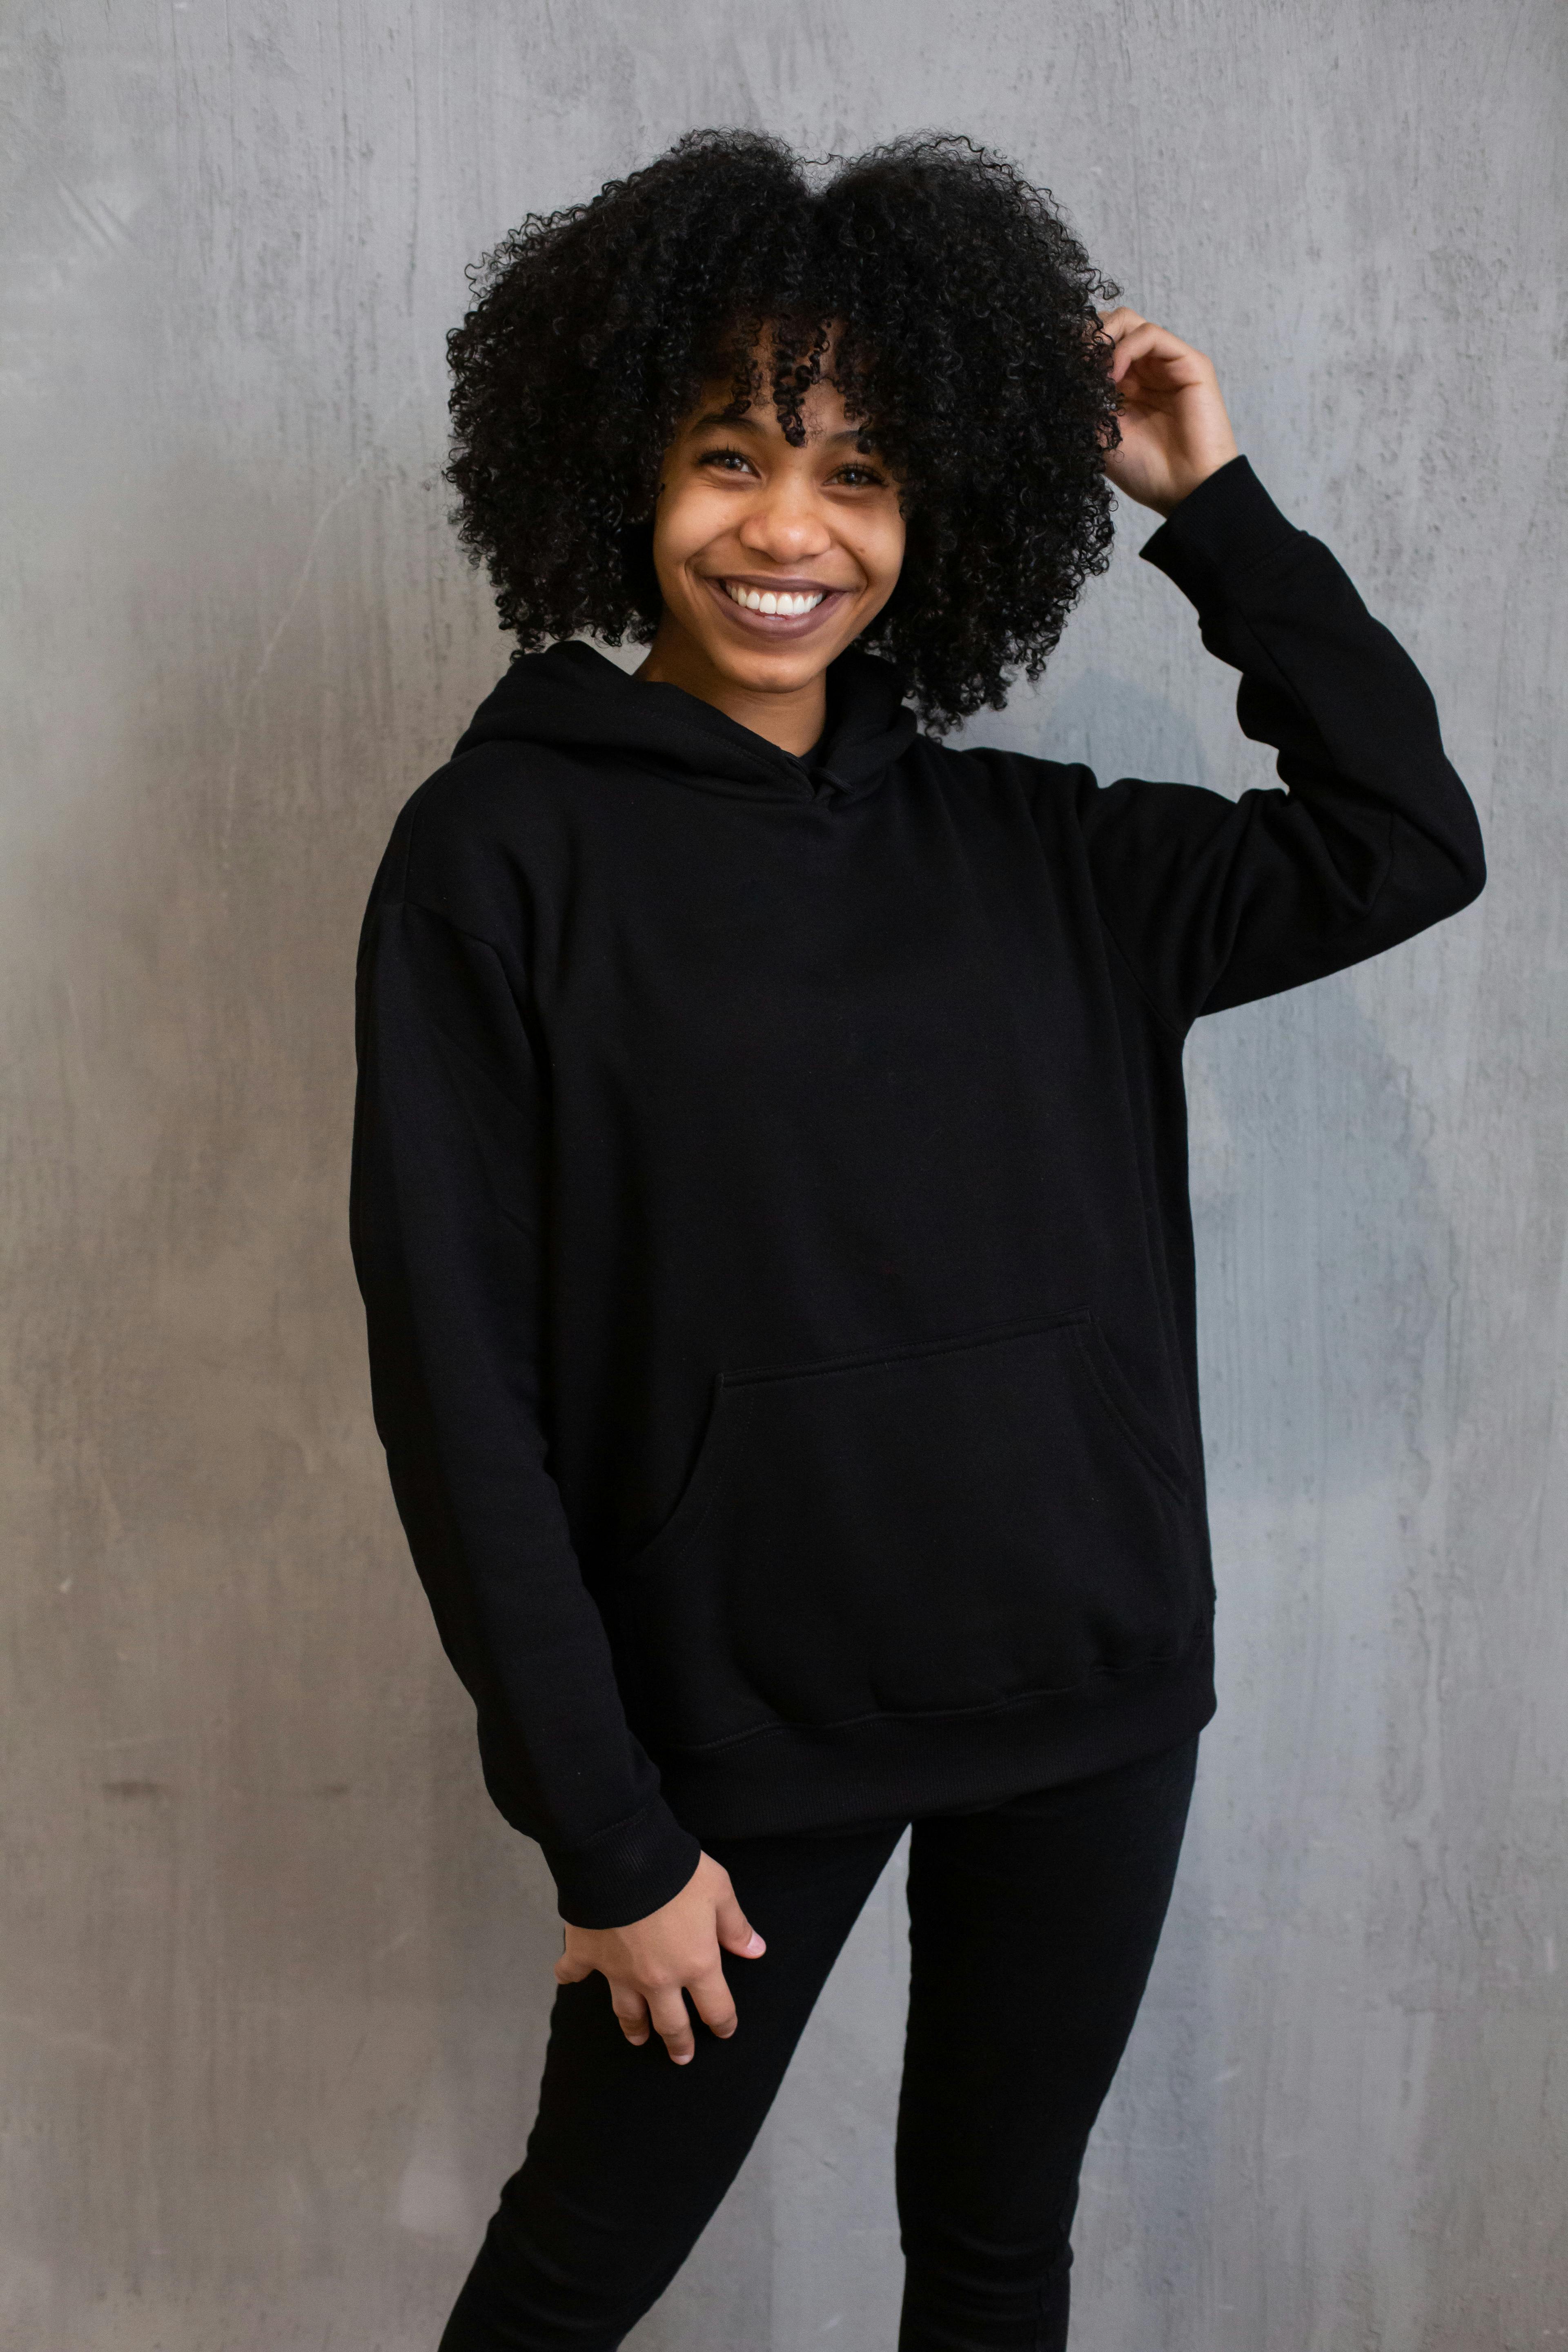 Cheerful black woman in white t shirt in studio · Free Stock Photo